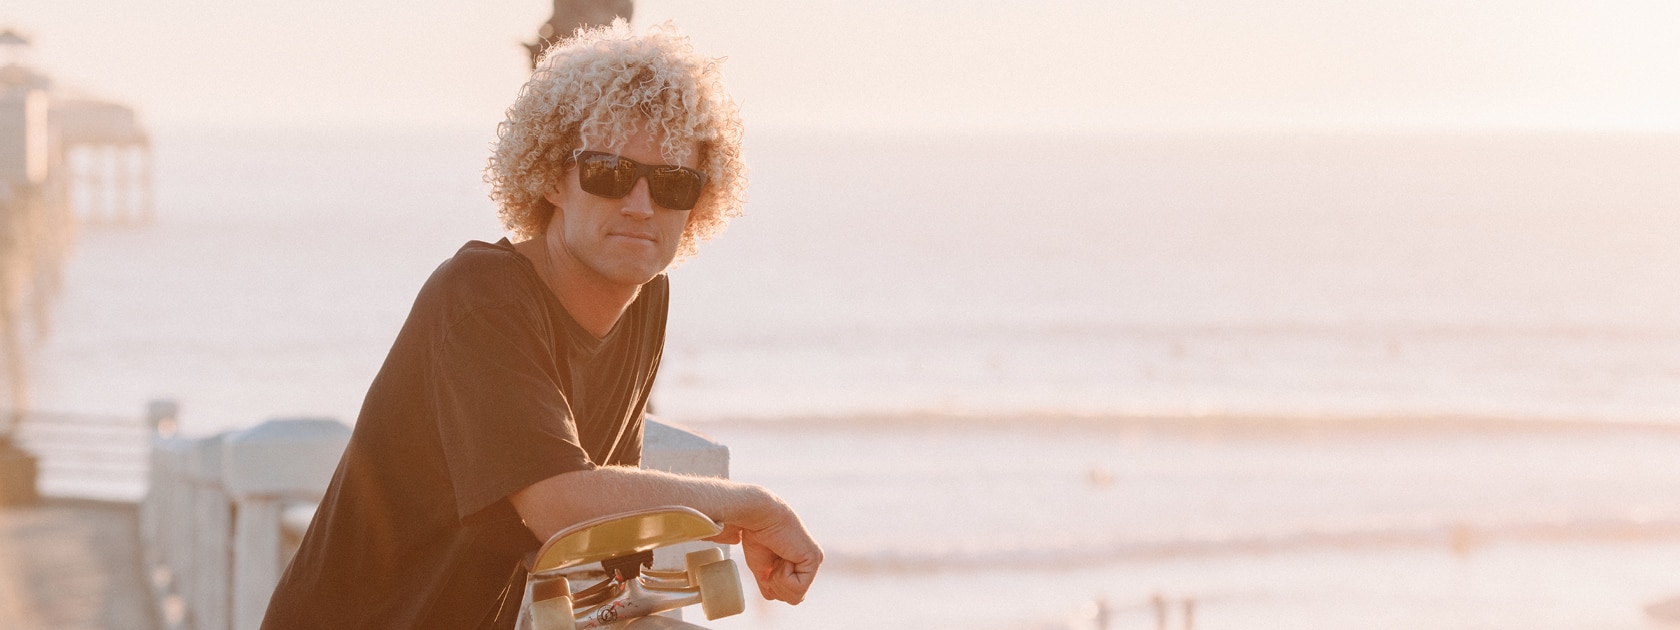 a man with a skateboard and wearing sunglasses near a beach